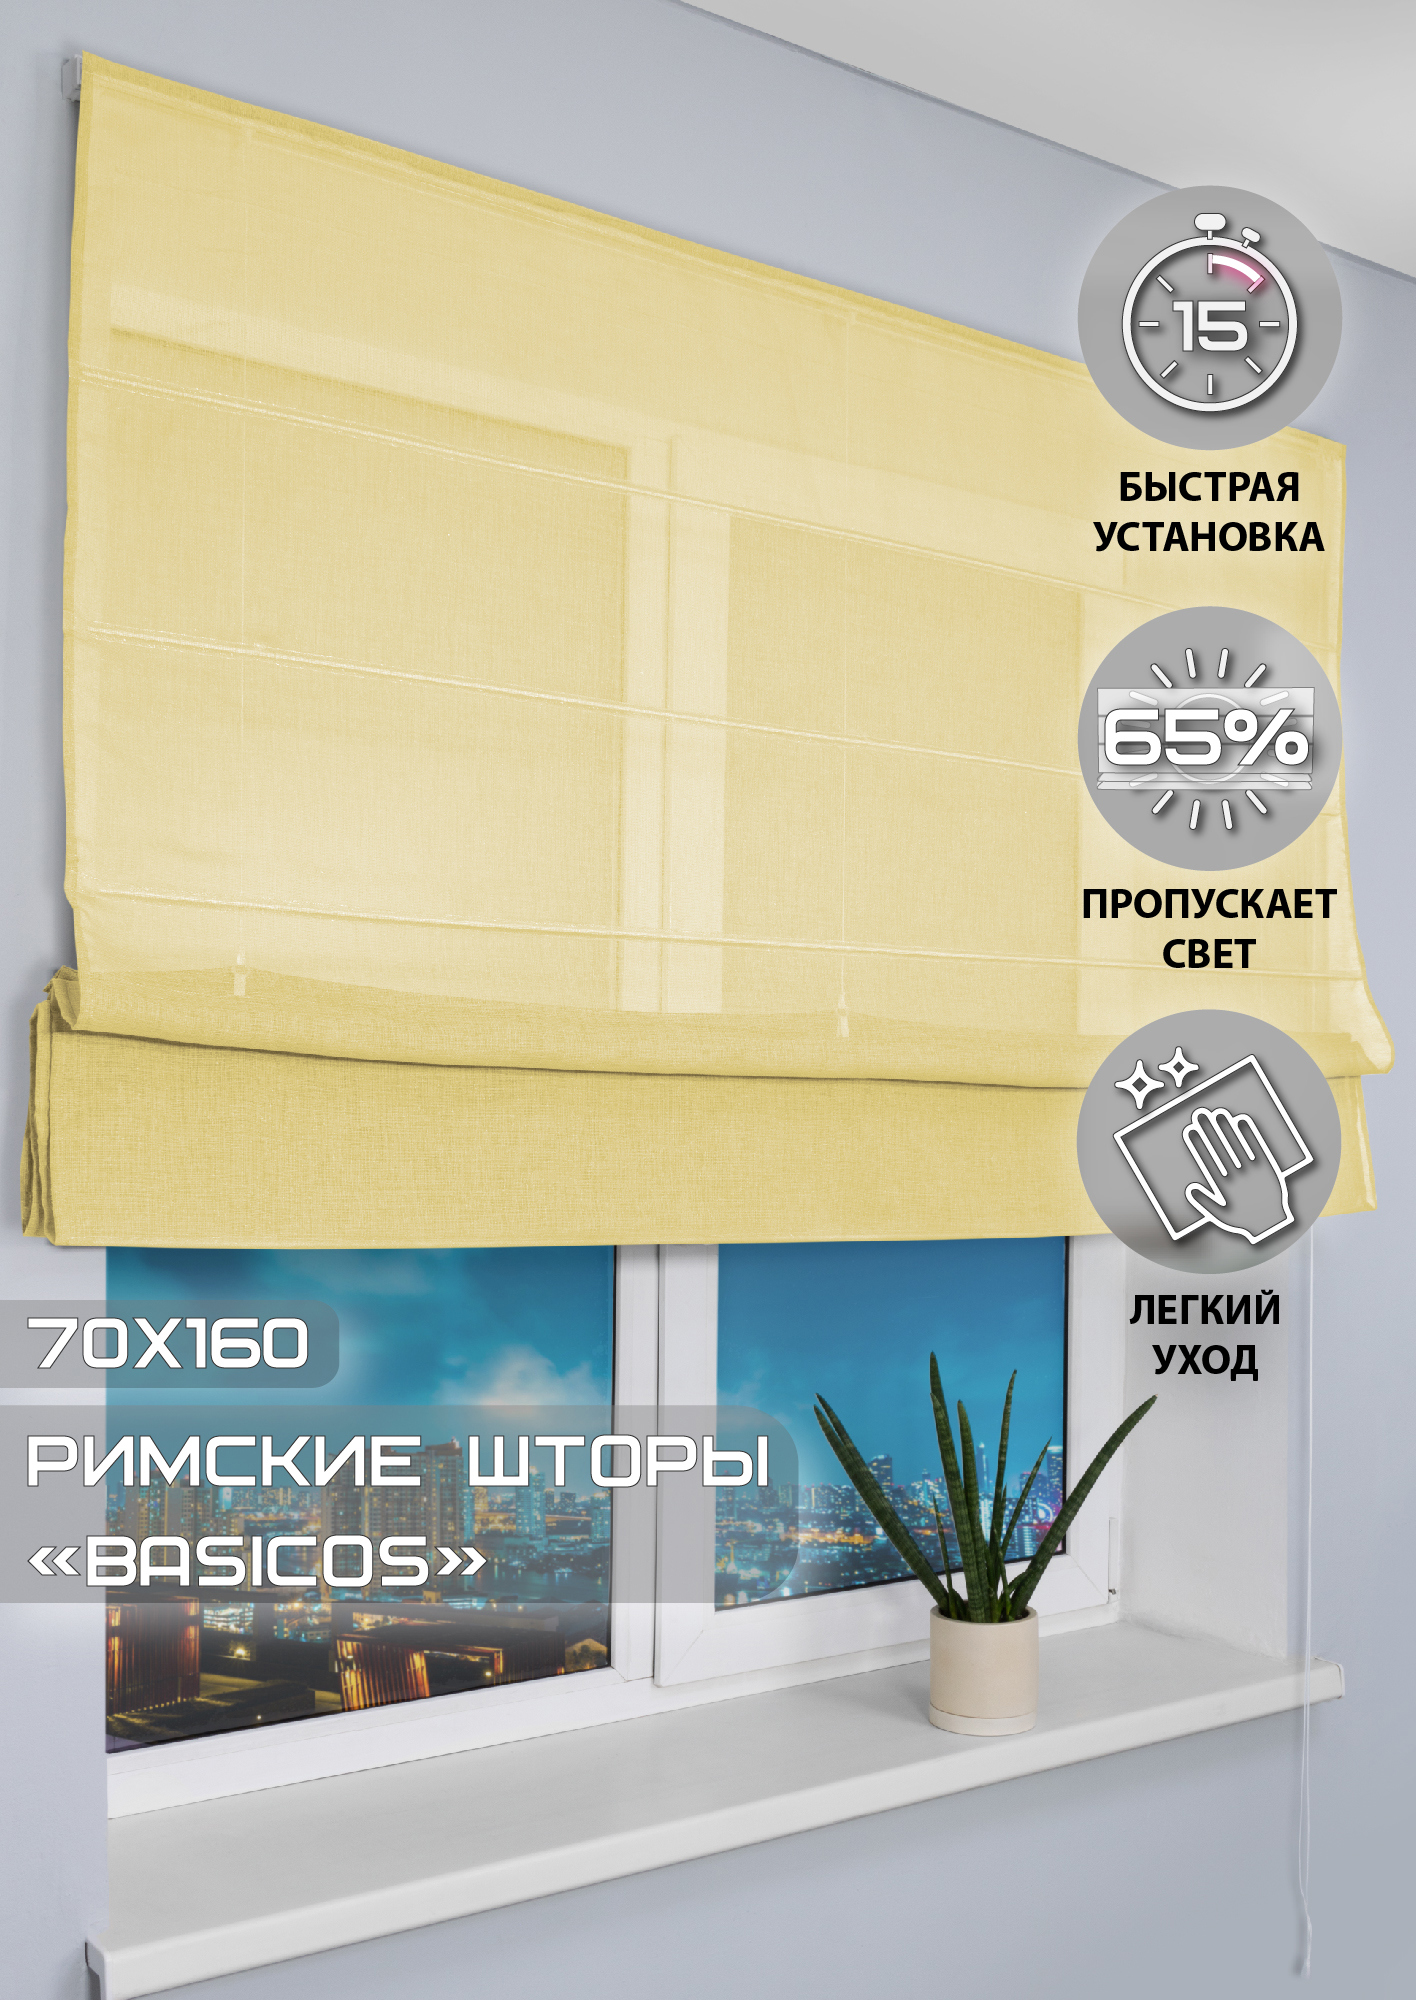 91002996 Римская штора "Basicos" 160x70 см цвет желтый STLM-0434250 ЭСКАР